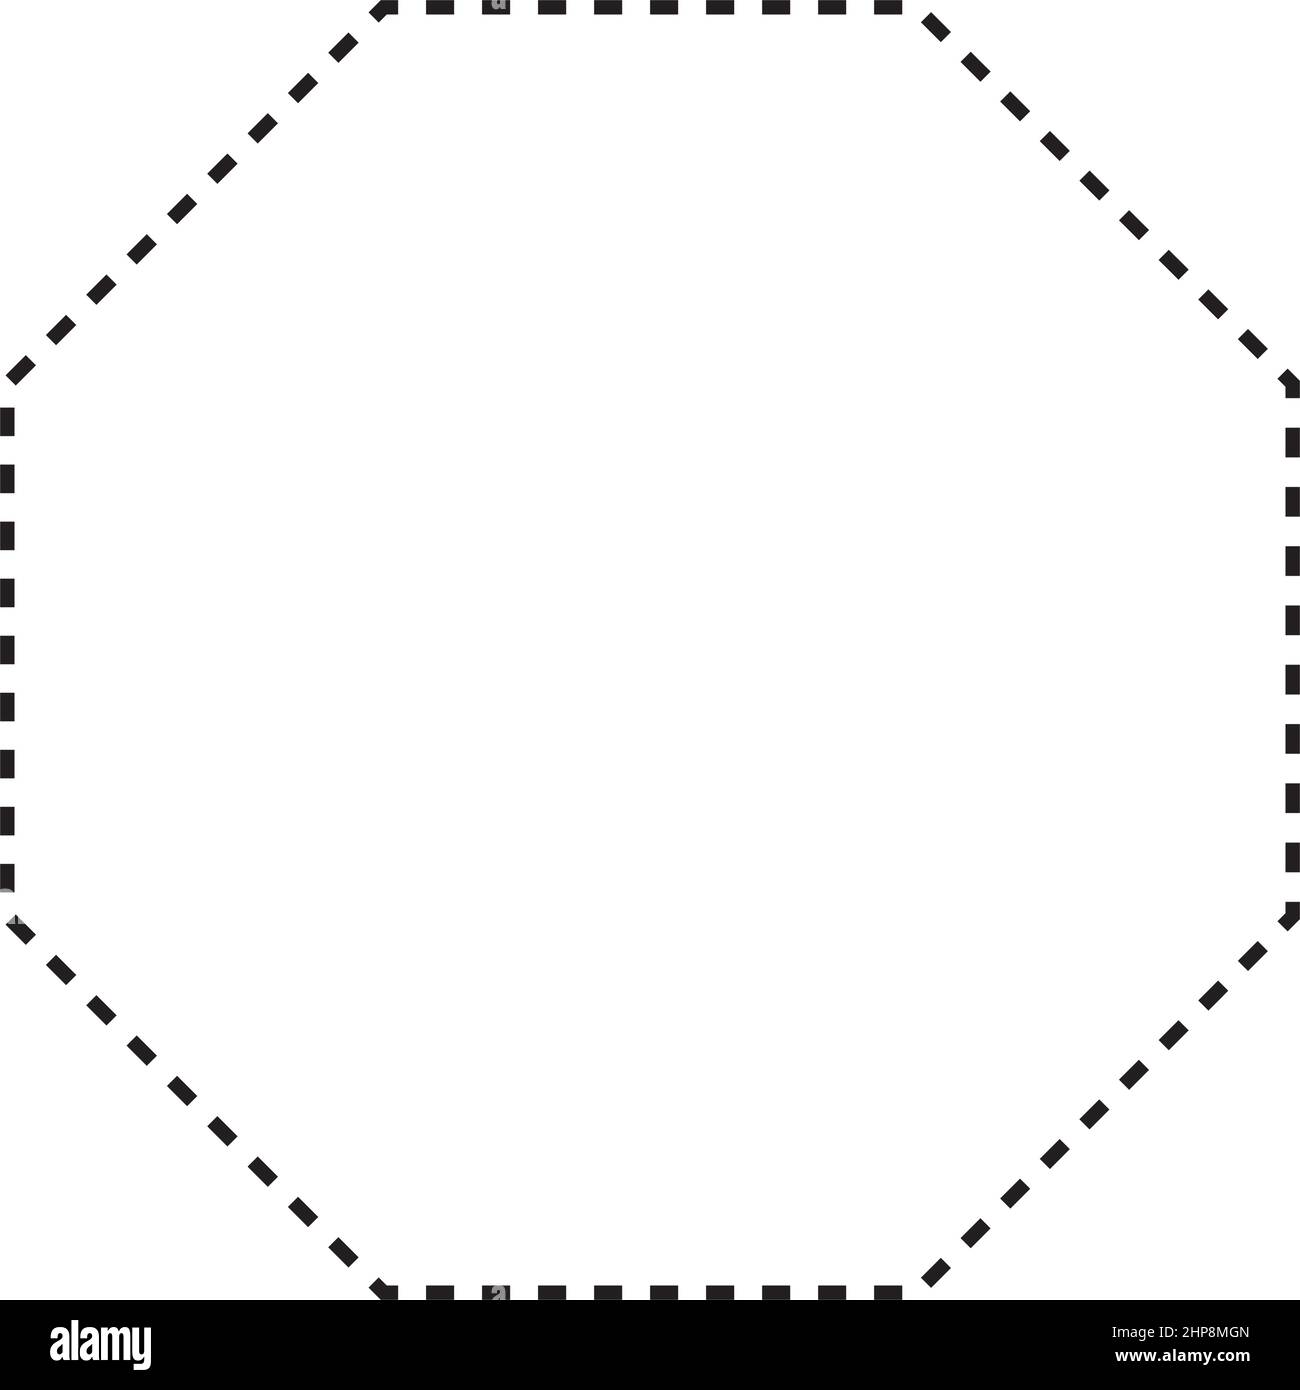 Achteckiges gestricheltes Symbol Vektor-Symbol für kreatives Grafikdesign ui-Element in einer Piktogramm-Illustration Stock Vektor